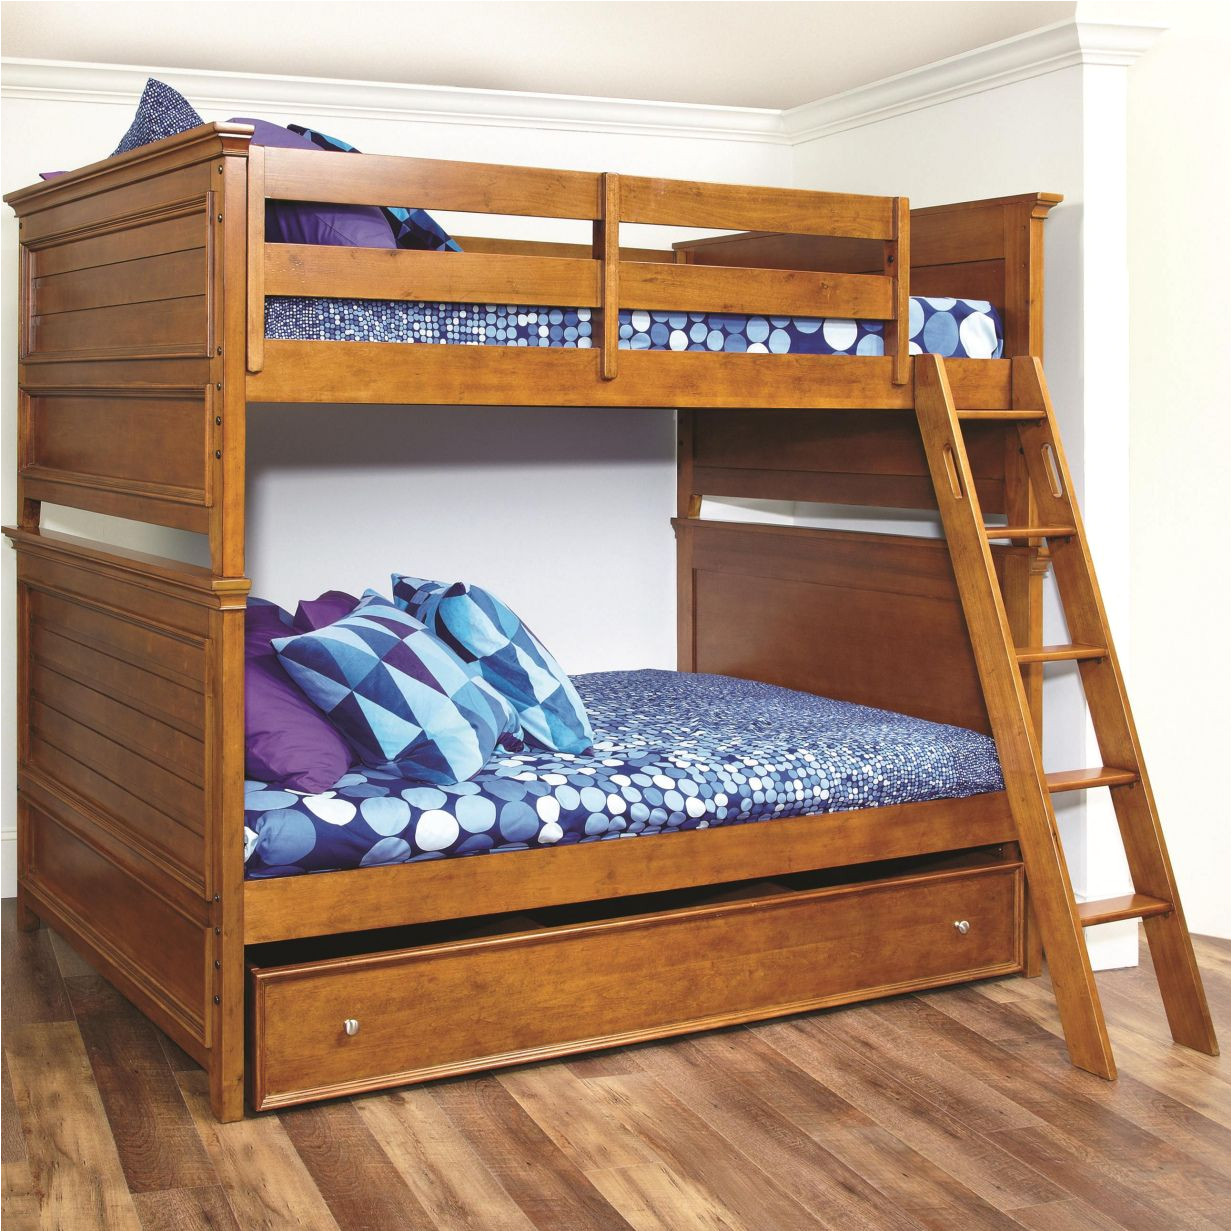 Allentown Bunk Bed assembly Instructions Pdf Pin Oleh Luciver Sanom Di Interior Inspiration Bedroom Bed Dan